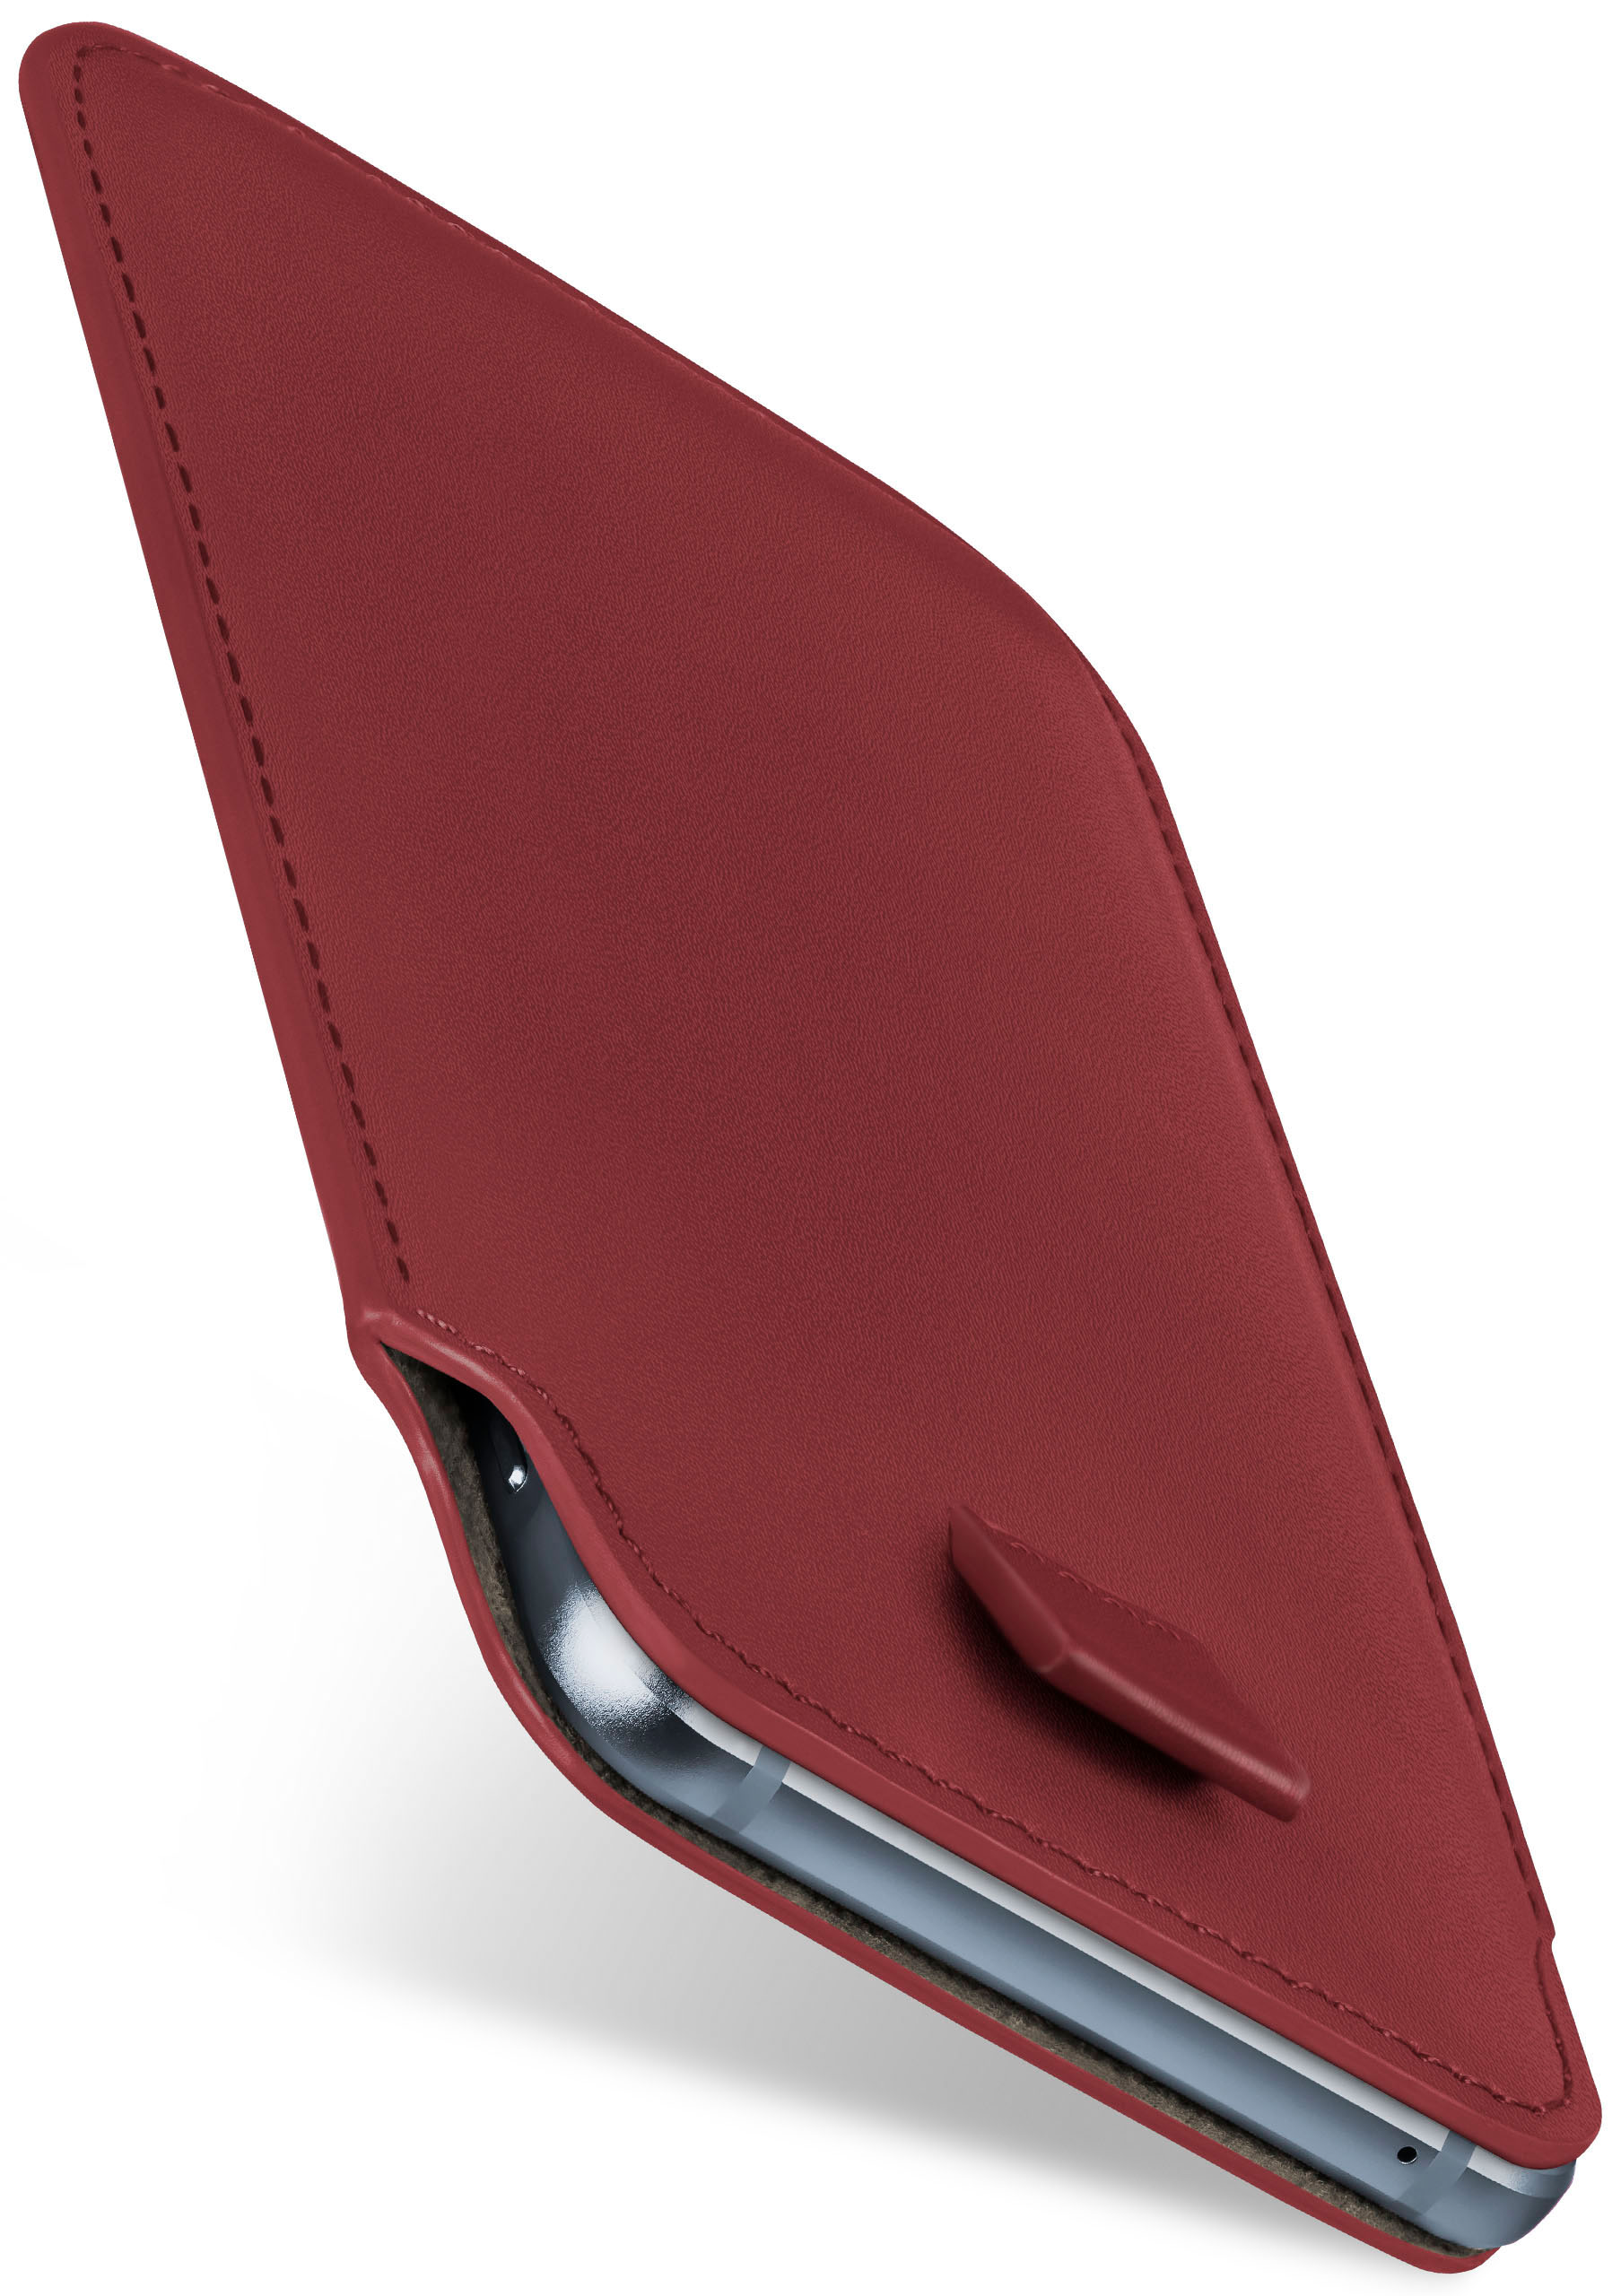 / Slide Note 4X, Cover, MOEX Xiaomi, Note Redmi Case, Maroon-Red 4 Full